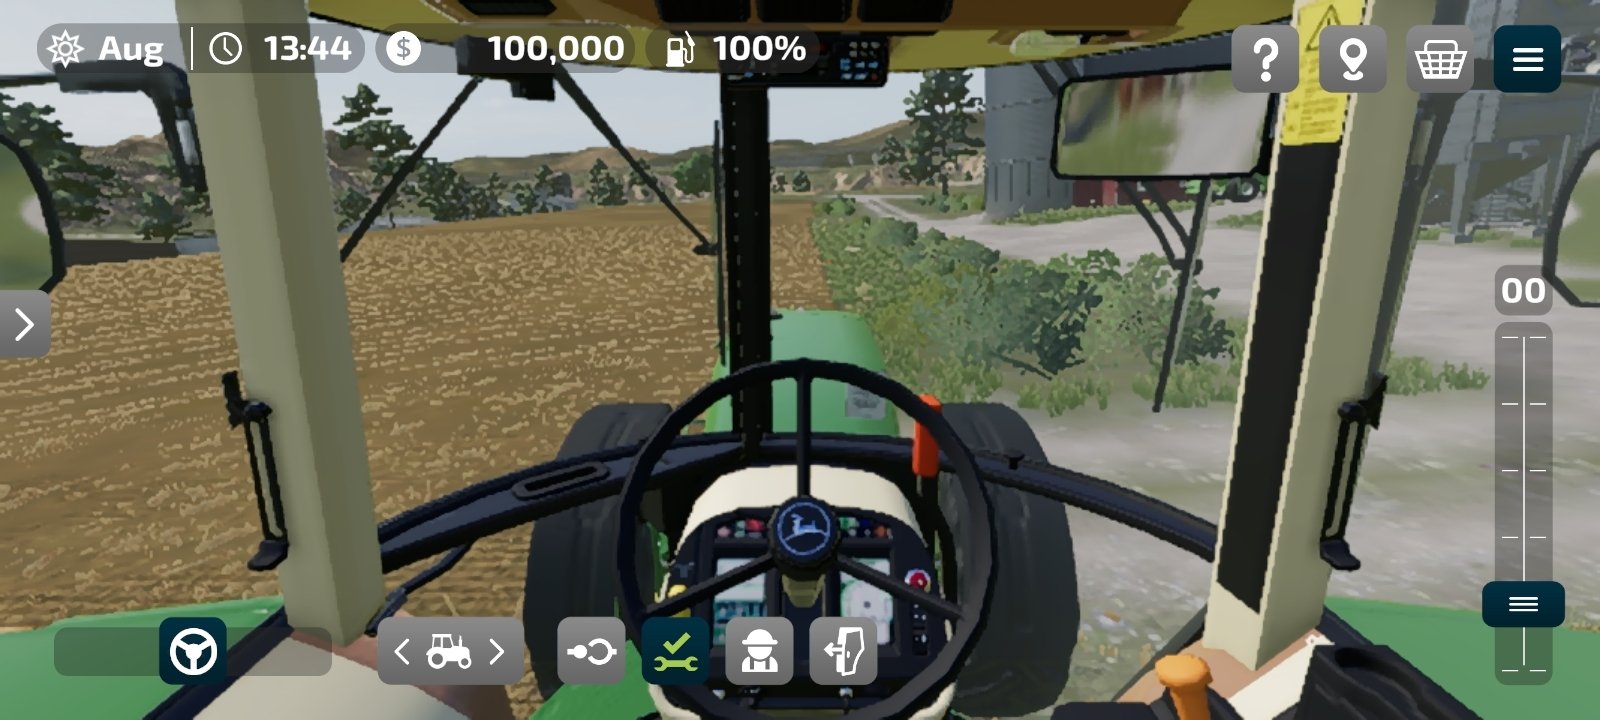 farming simulator 19 mod that gives you money